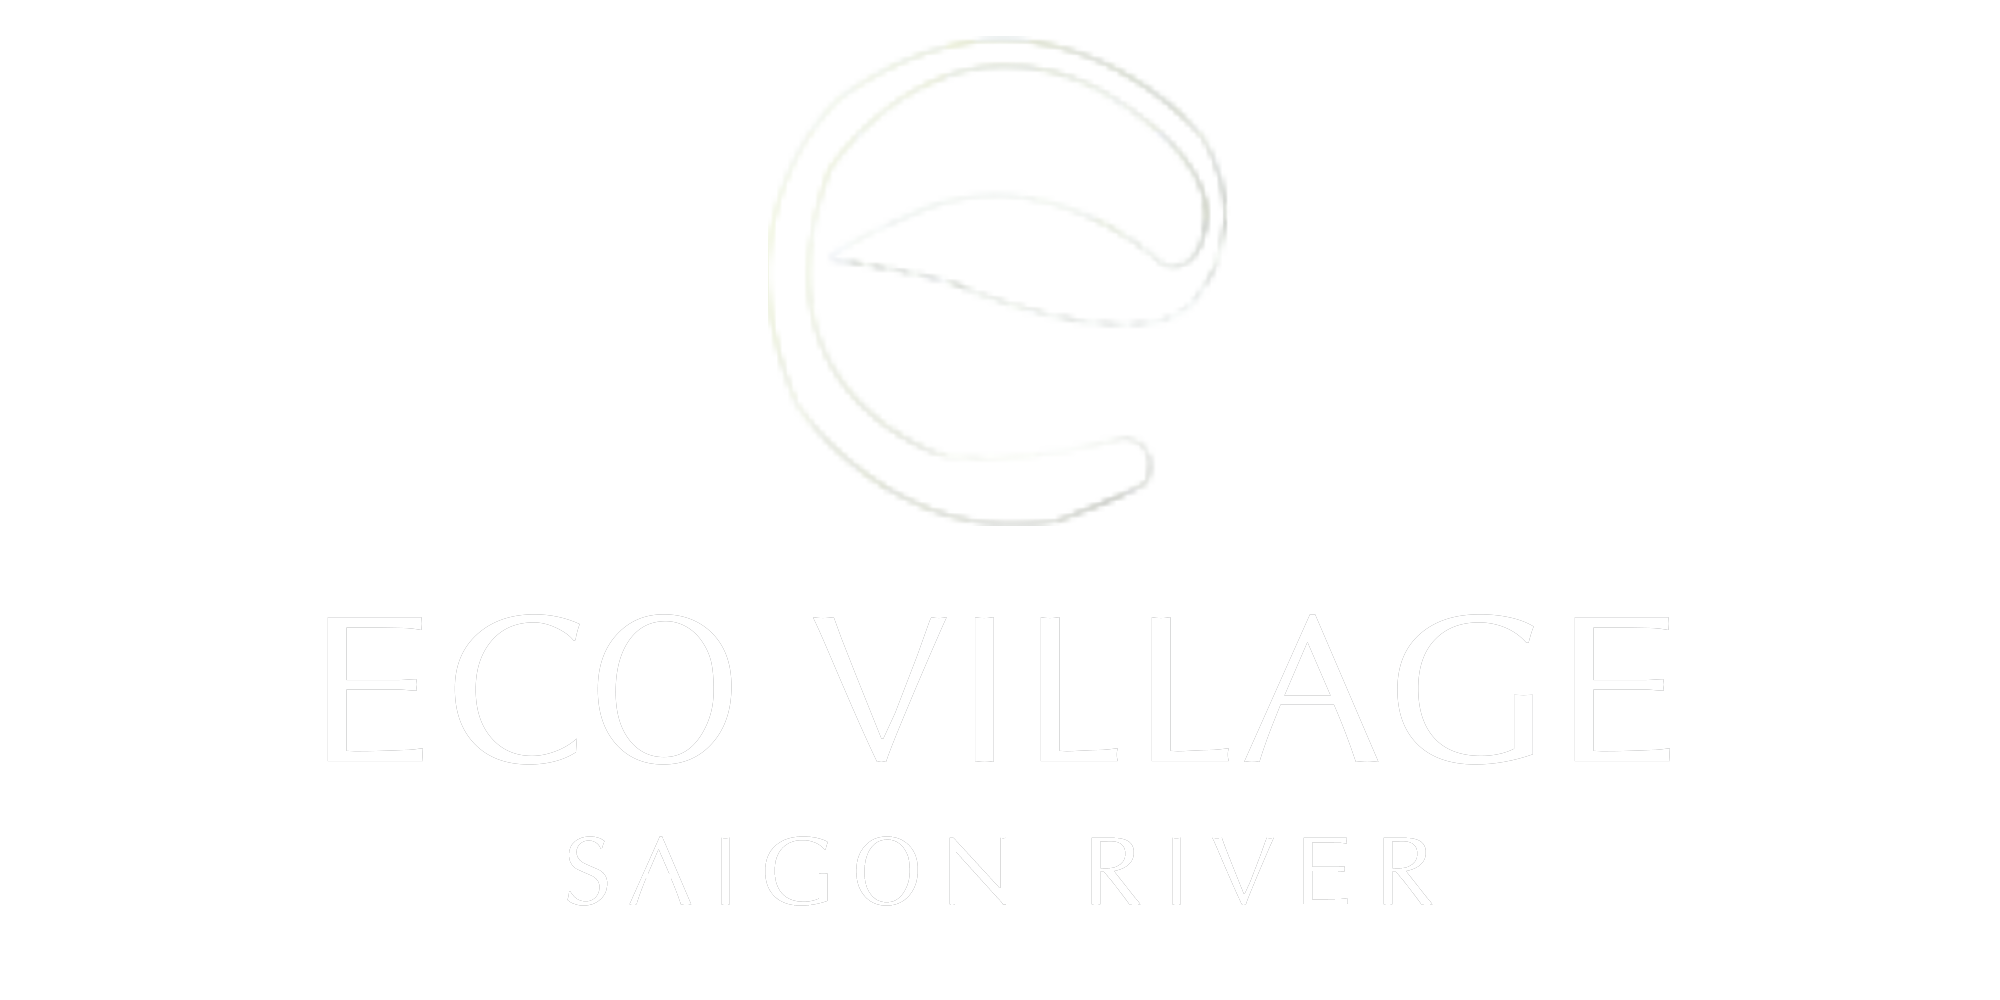 Eco Village Sài Gòn River